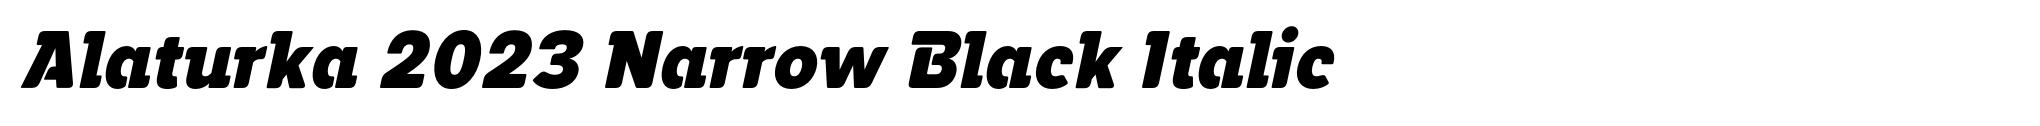 Alaturka 2023 Narrow Black Italic image